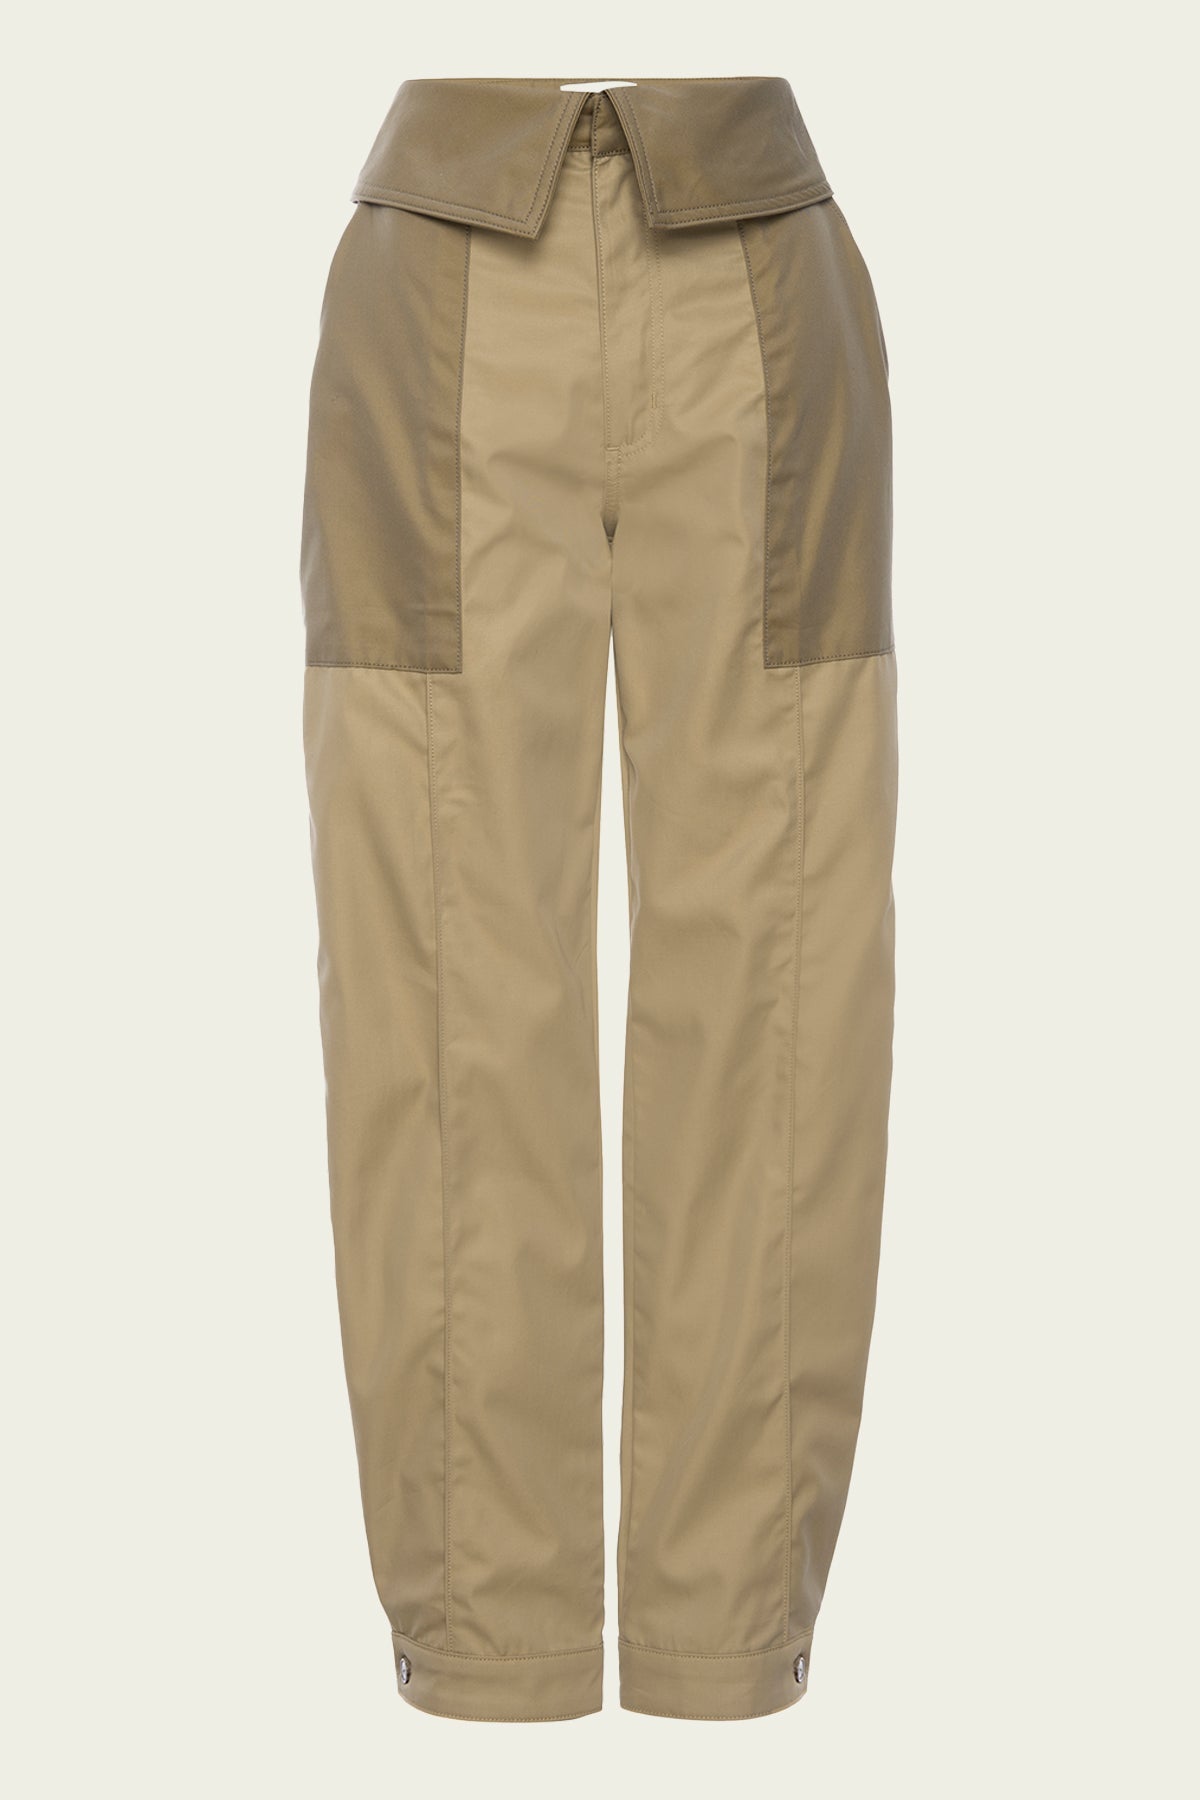 Foldover Trouser in Light Tan Multi - shop-olivia.com